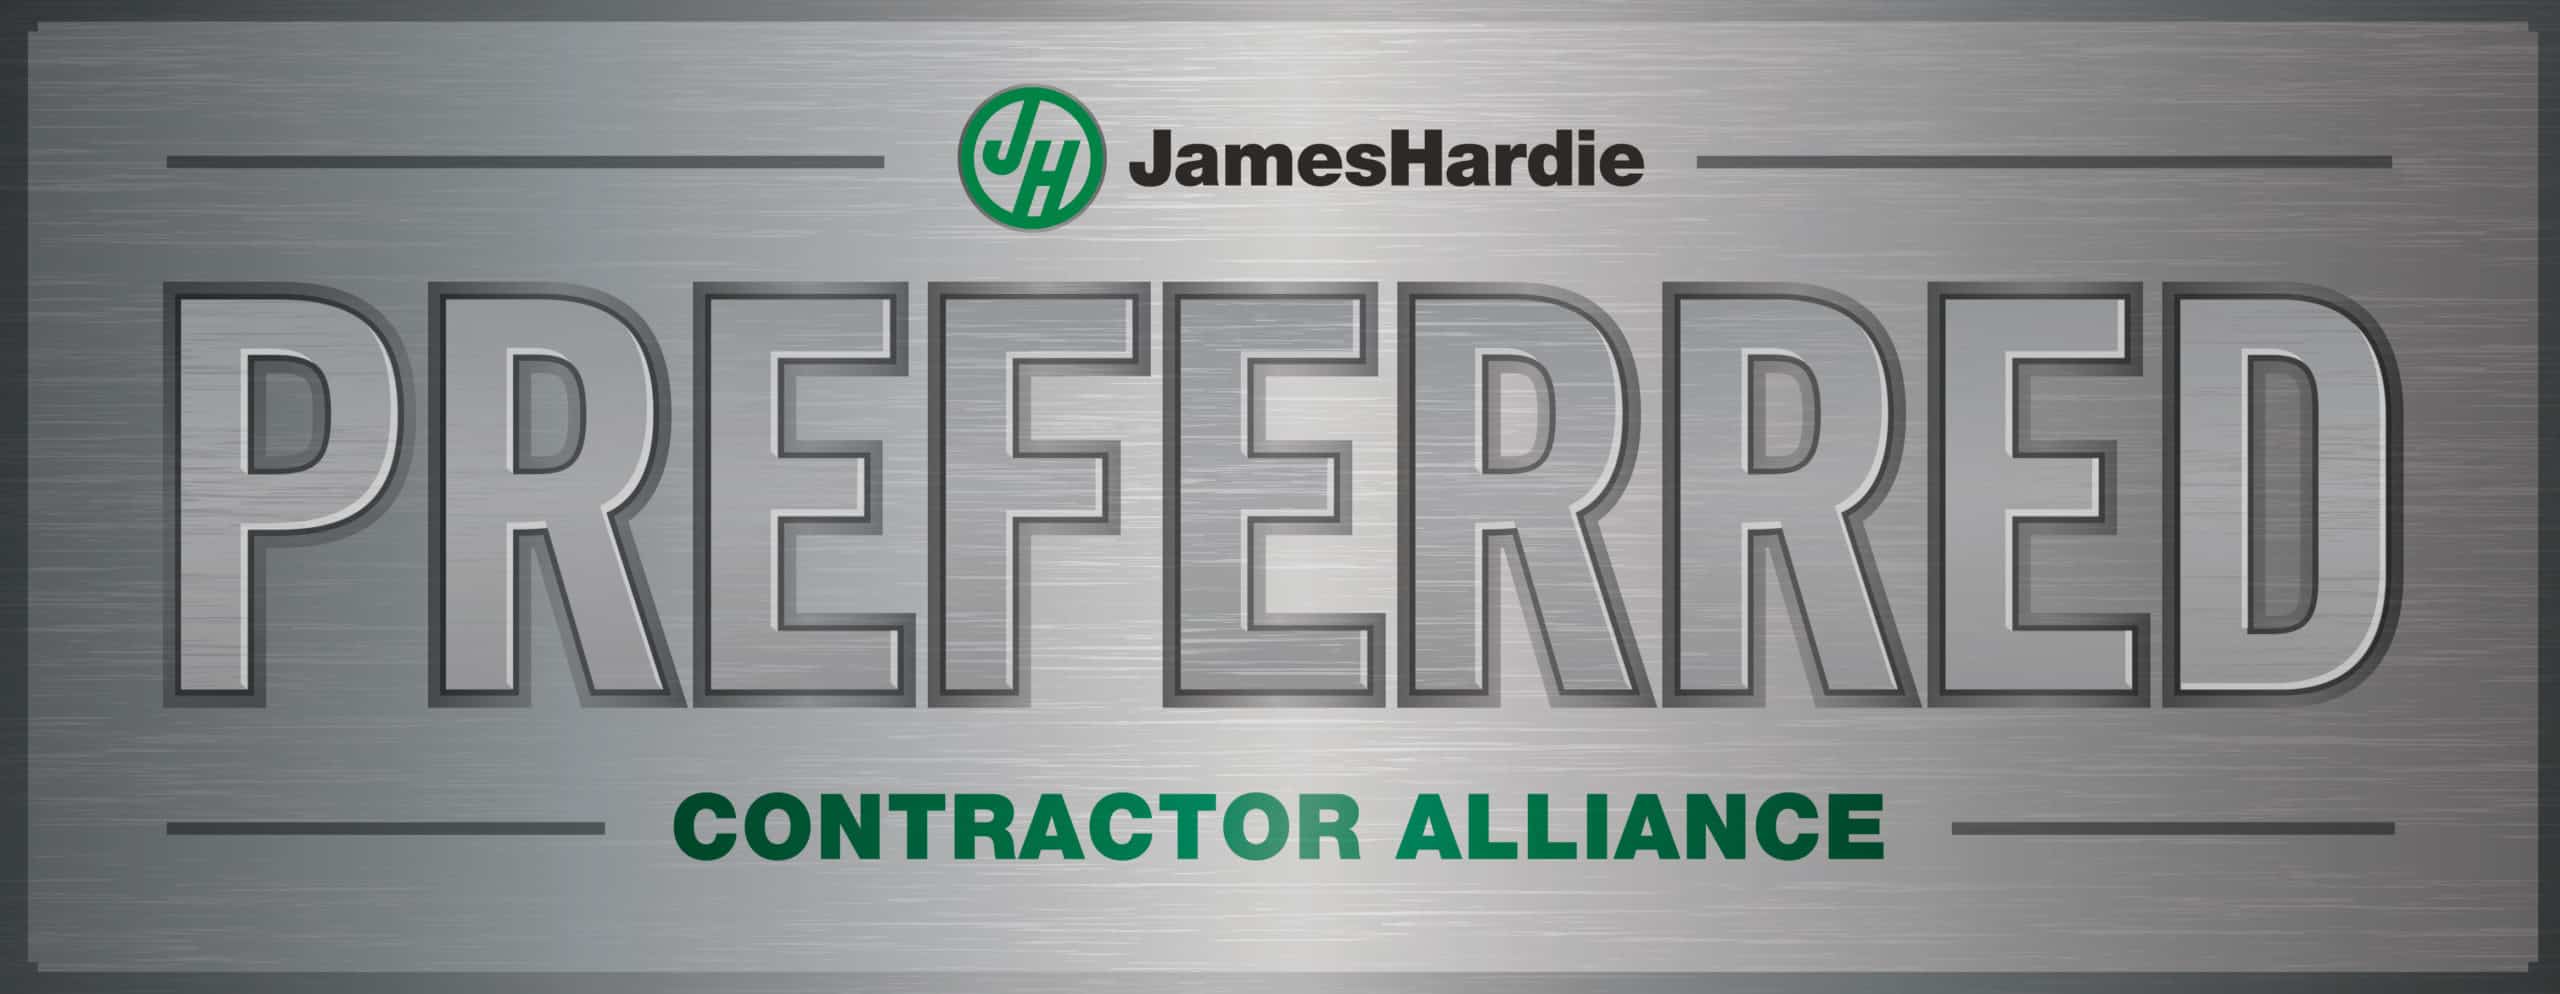 James Hardie Siding Certified Contractor Badge